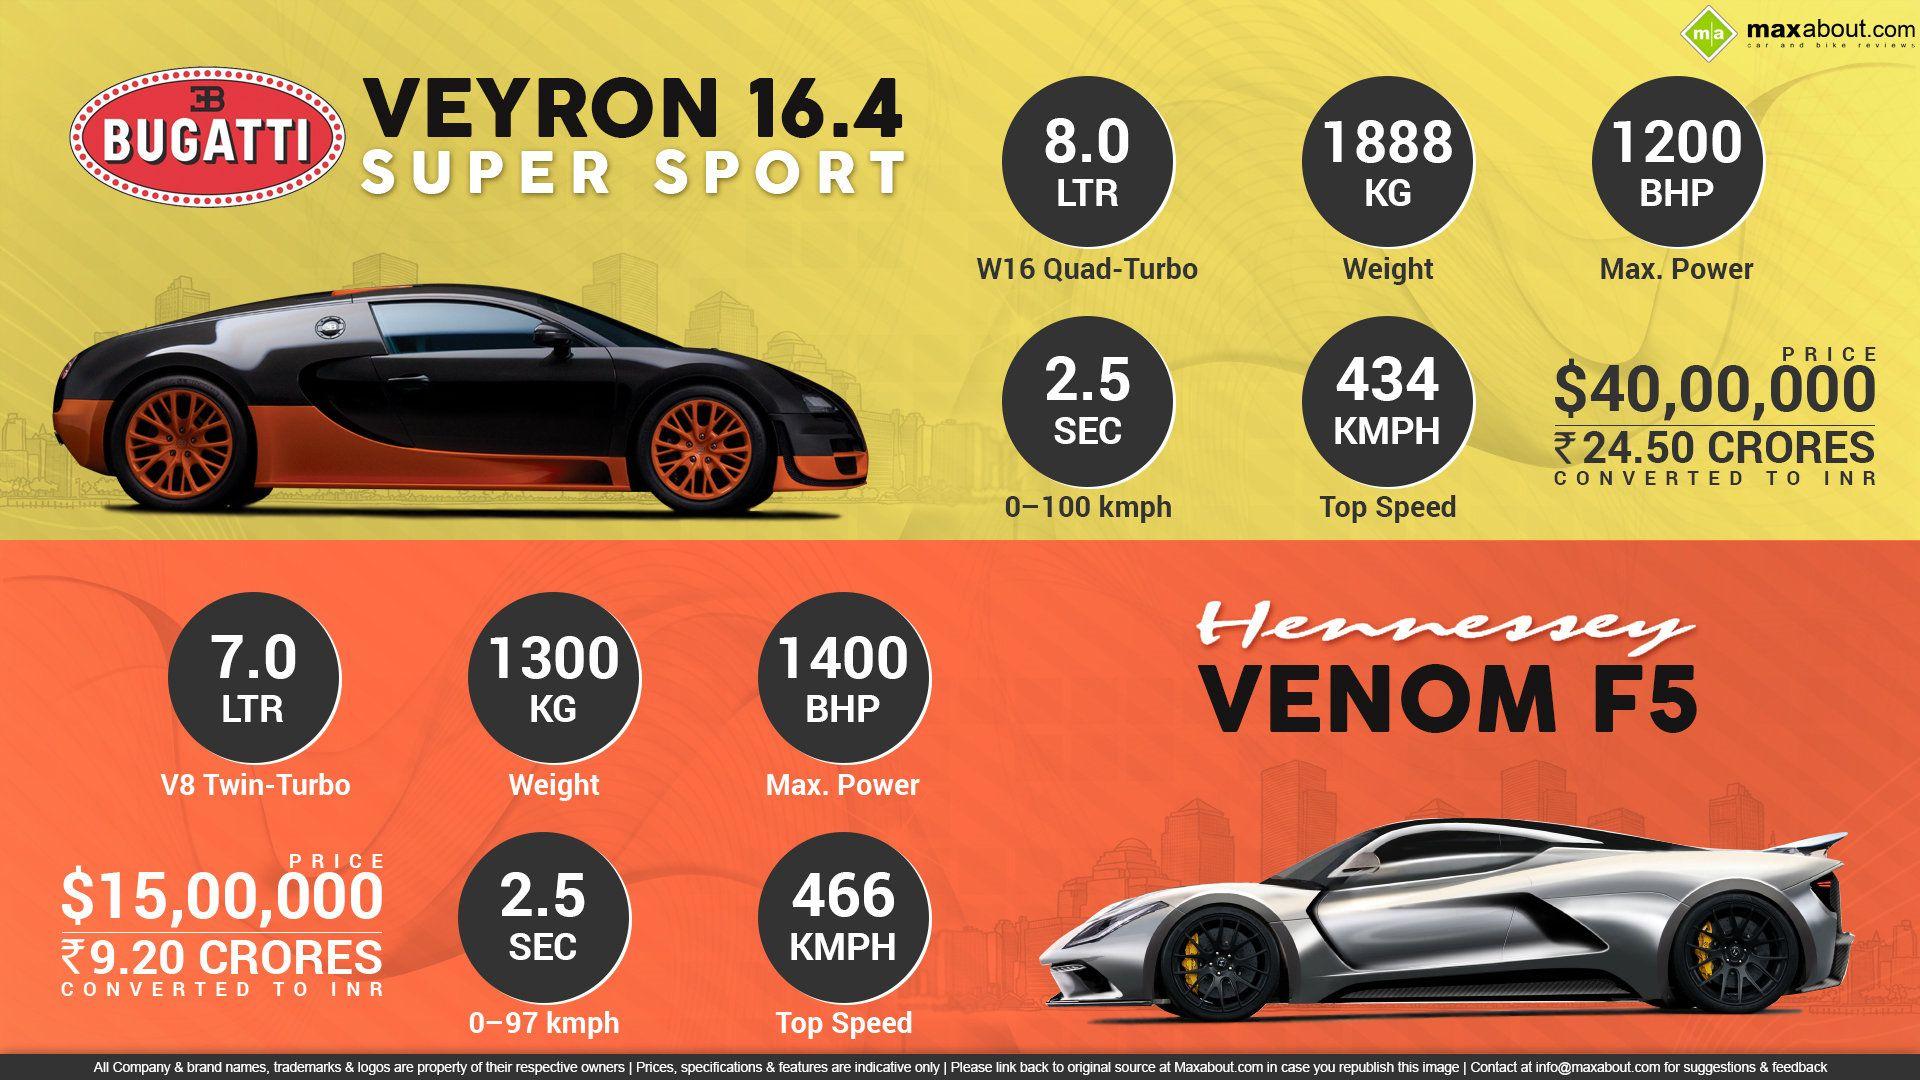 Hennessey Venom F5 Logo - Quick Comparison Veyron Super Sport vs. Hennessey Venom F5